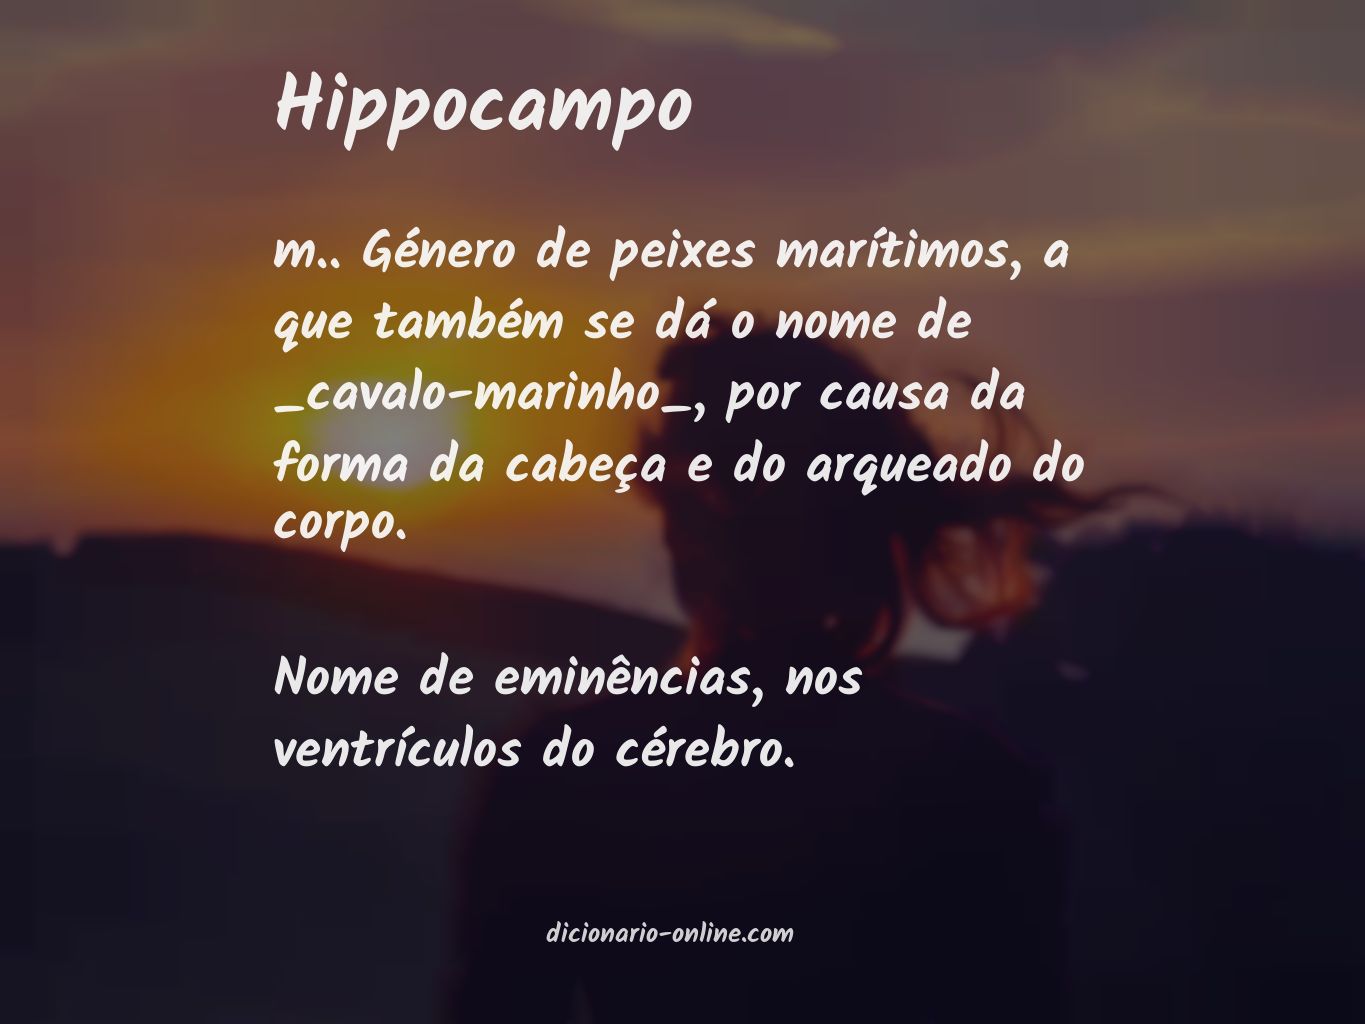 Significado de hippocampo